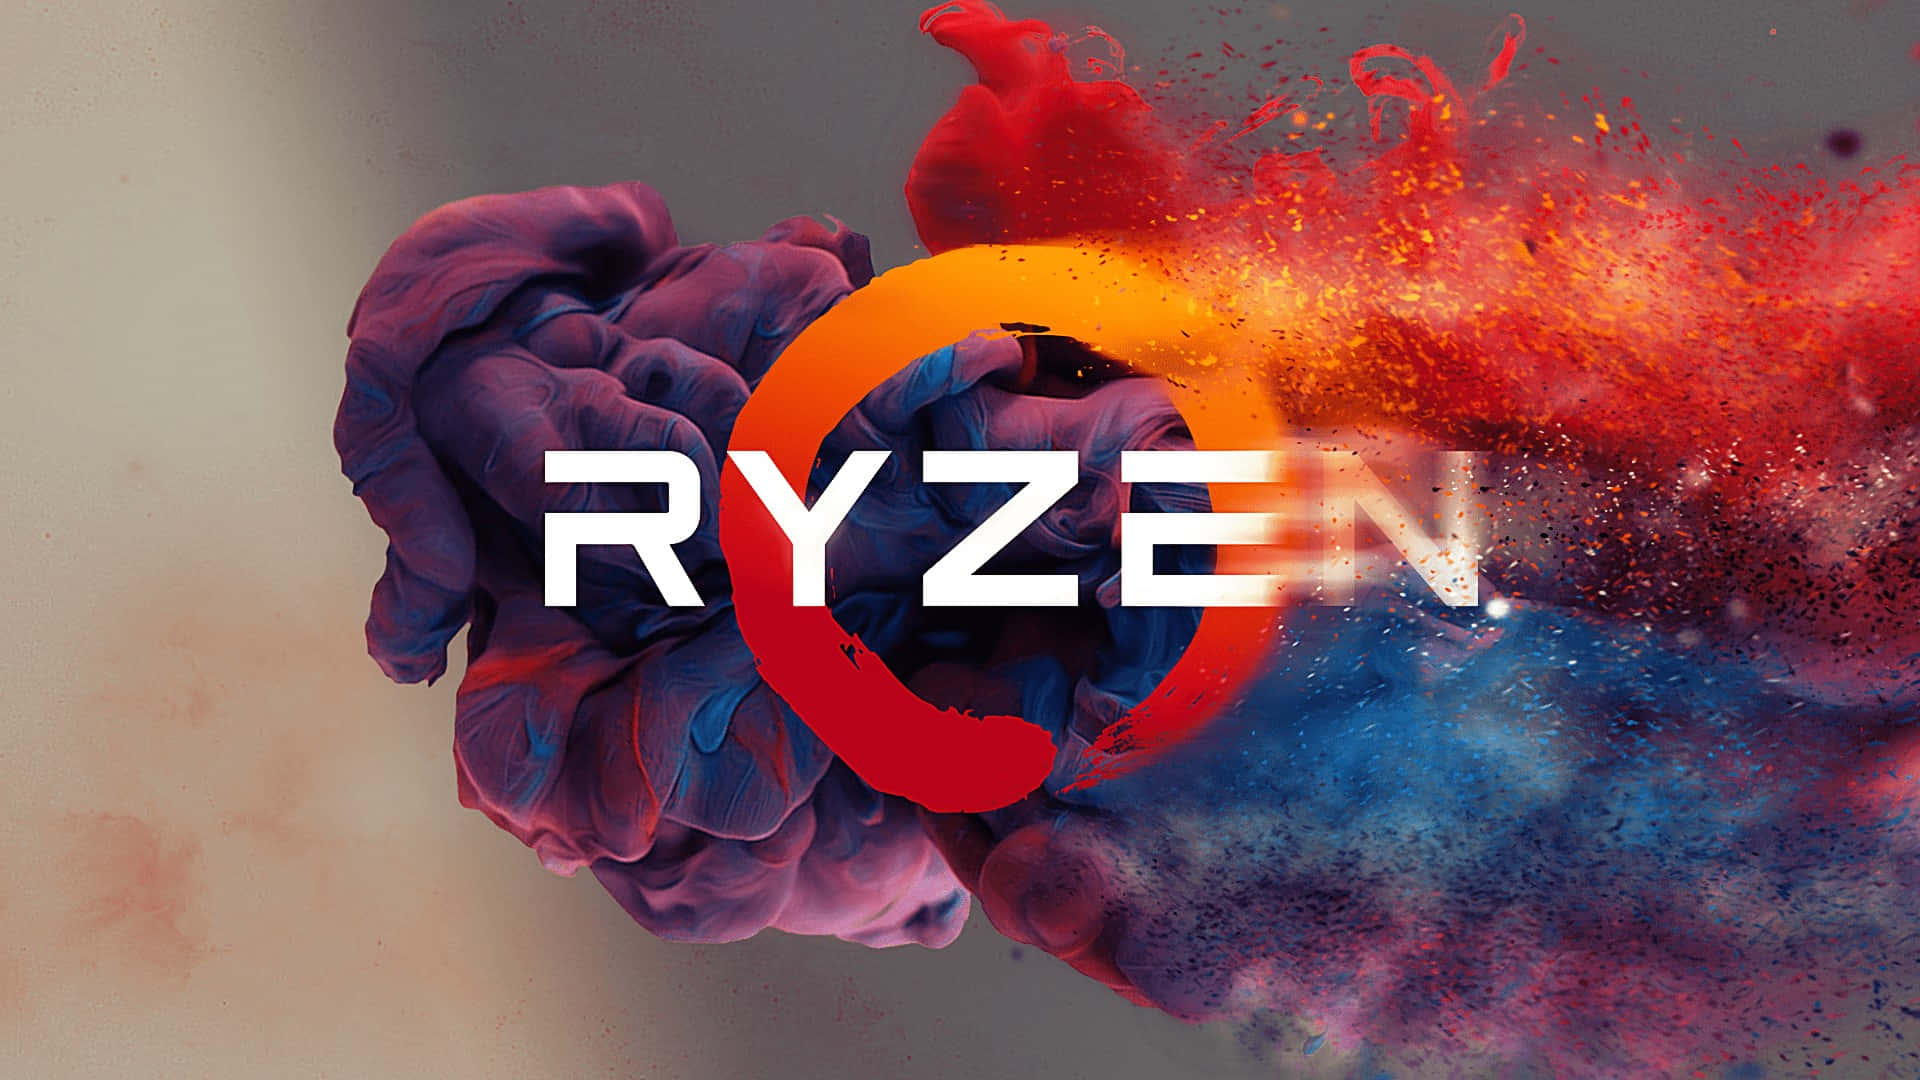 Ryzen Logo Artistic Explosion Wallpaper